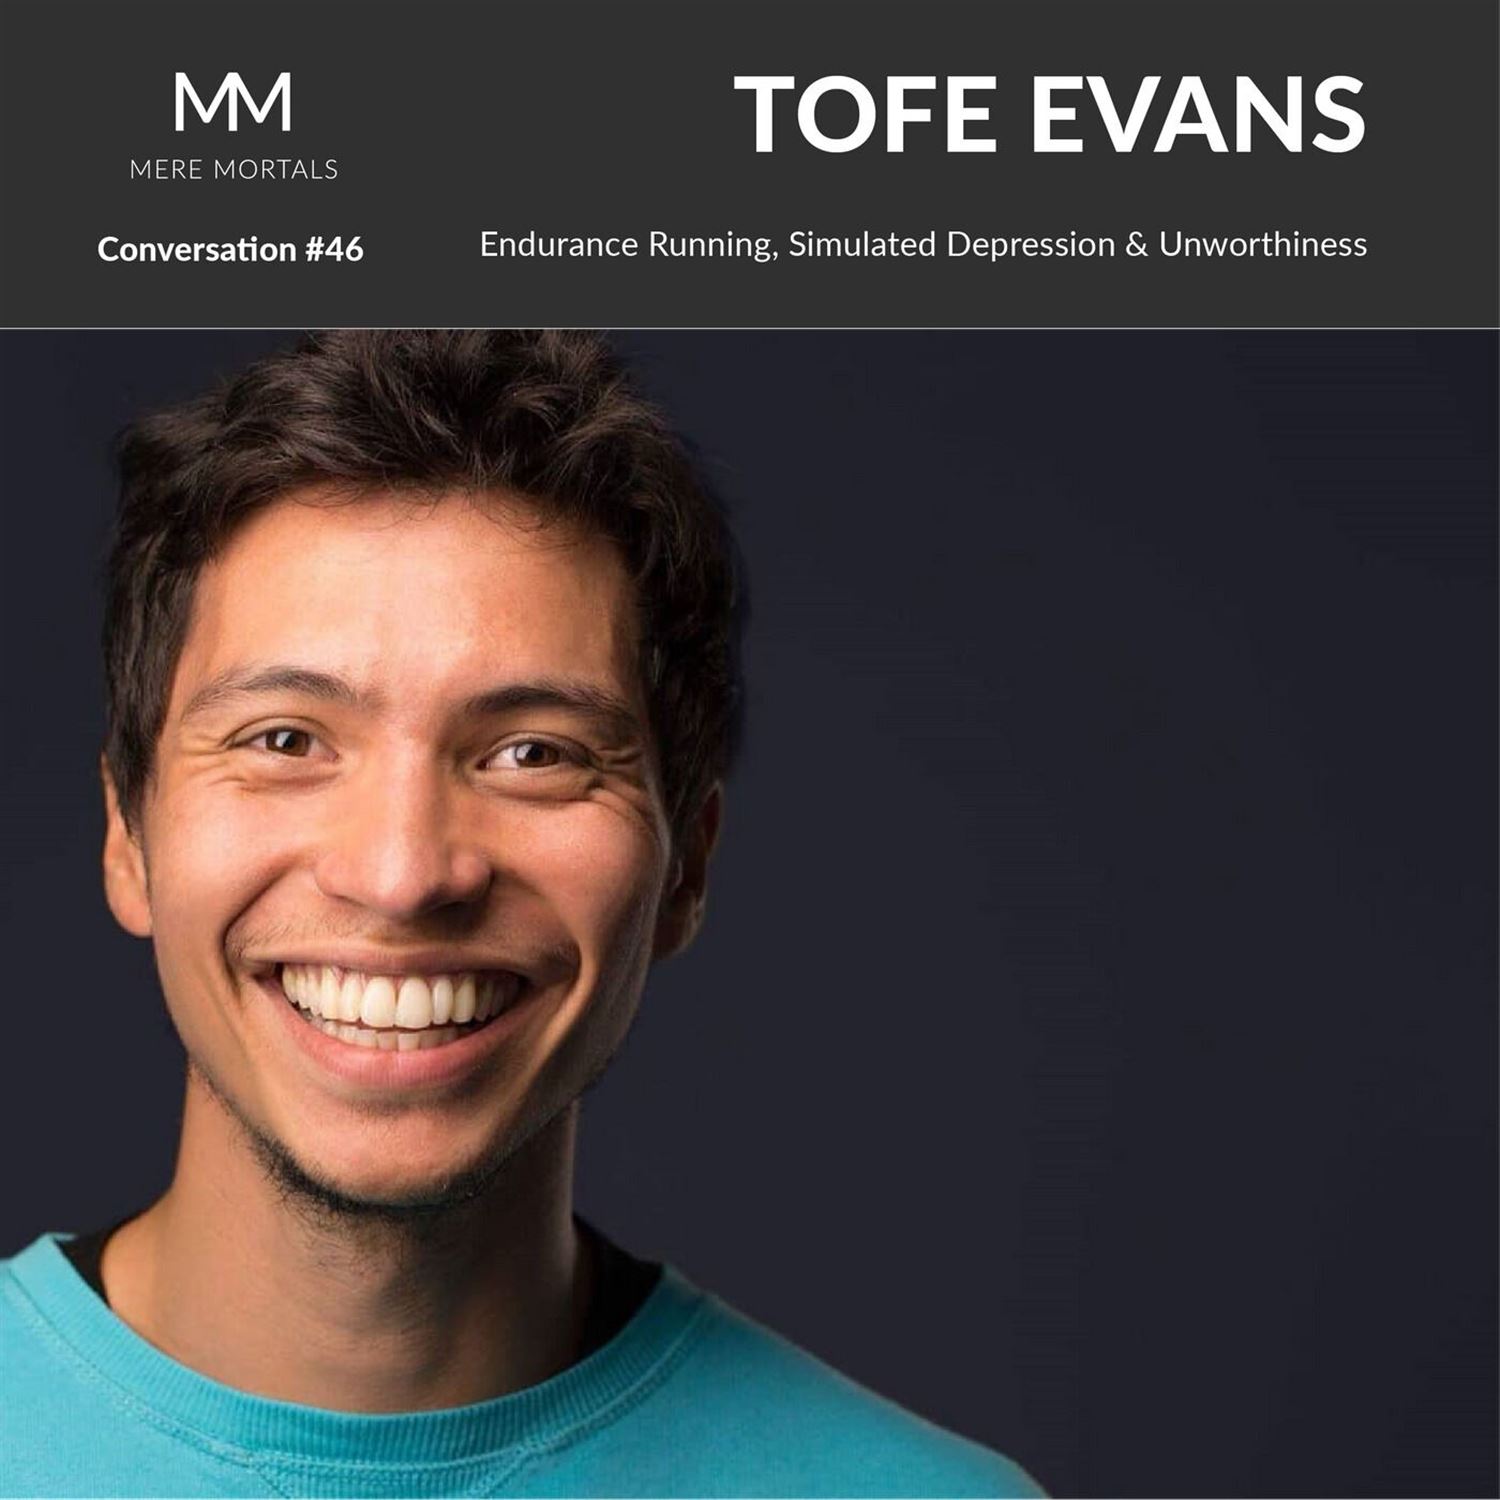 TOFE EVANS | Endurance Running, Simulated Depression & Unworthiness